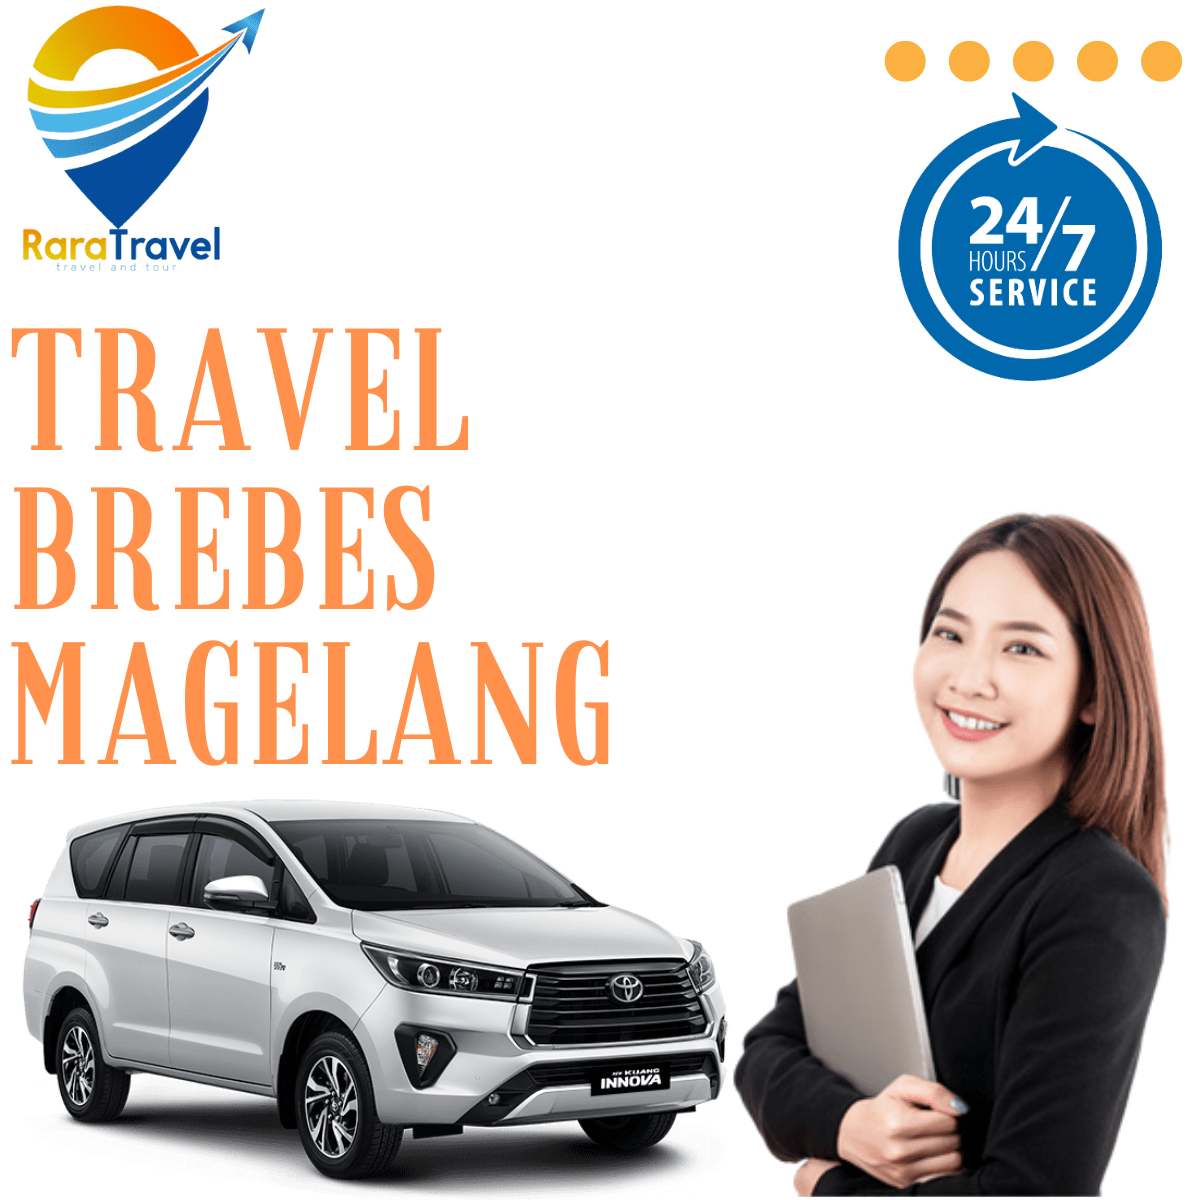 Travel Brebes Magelang - RARATRAVEL.ID